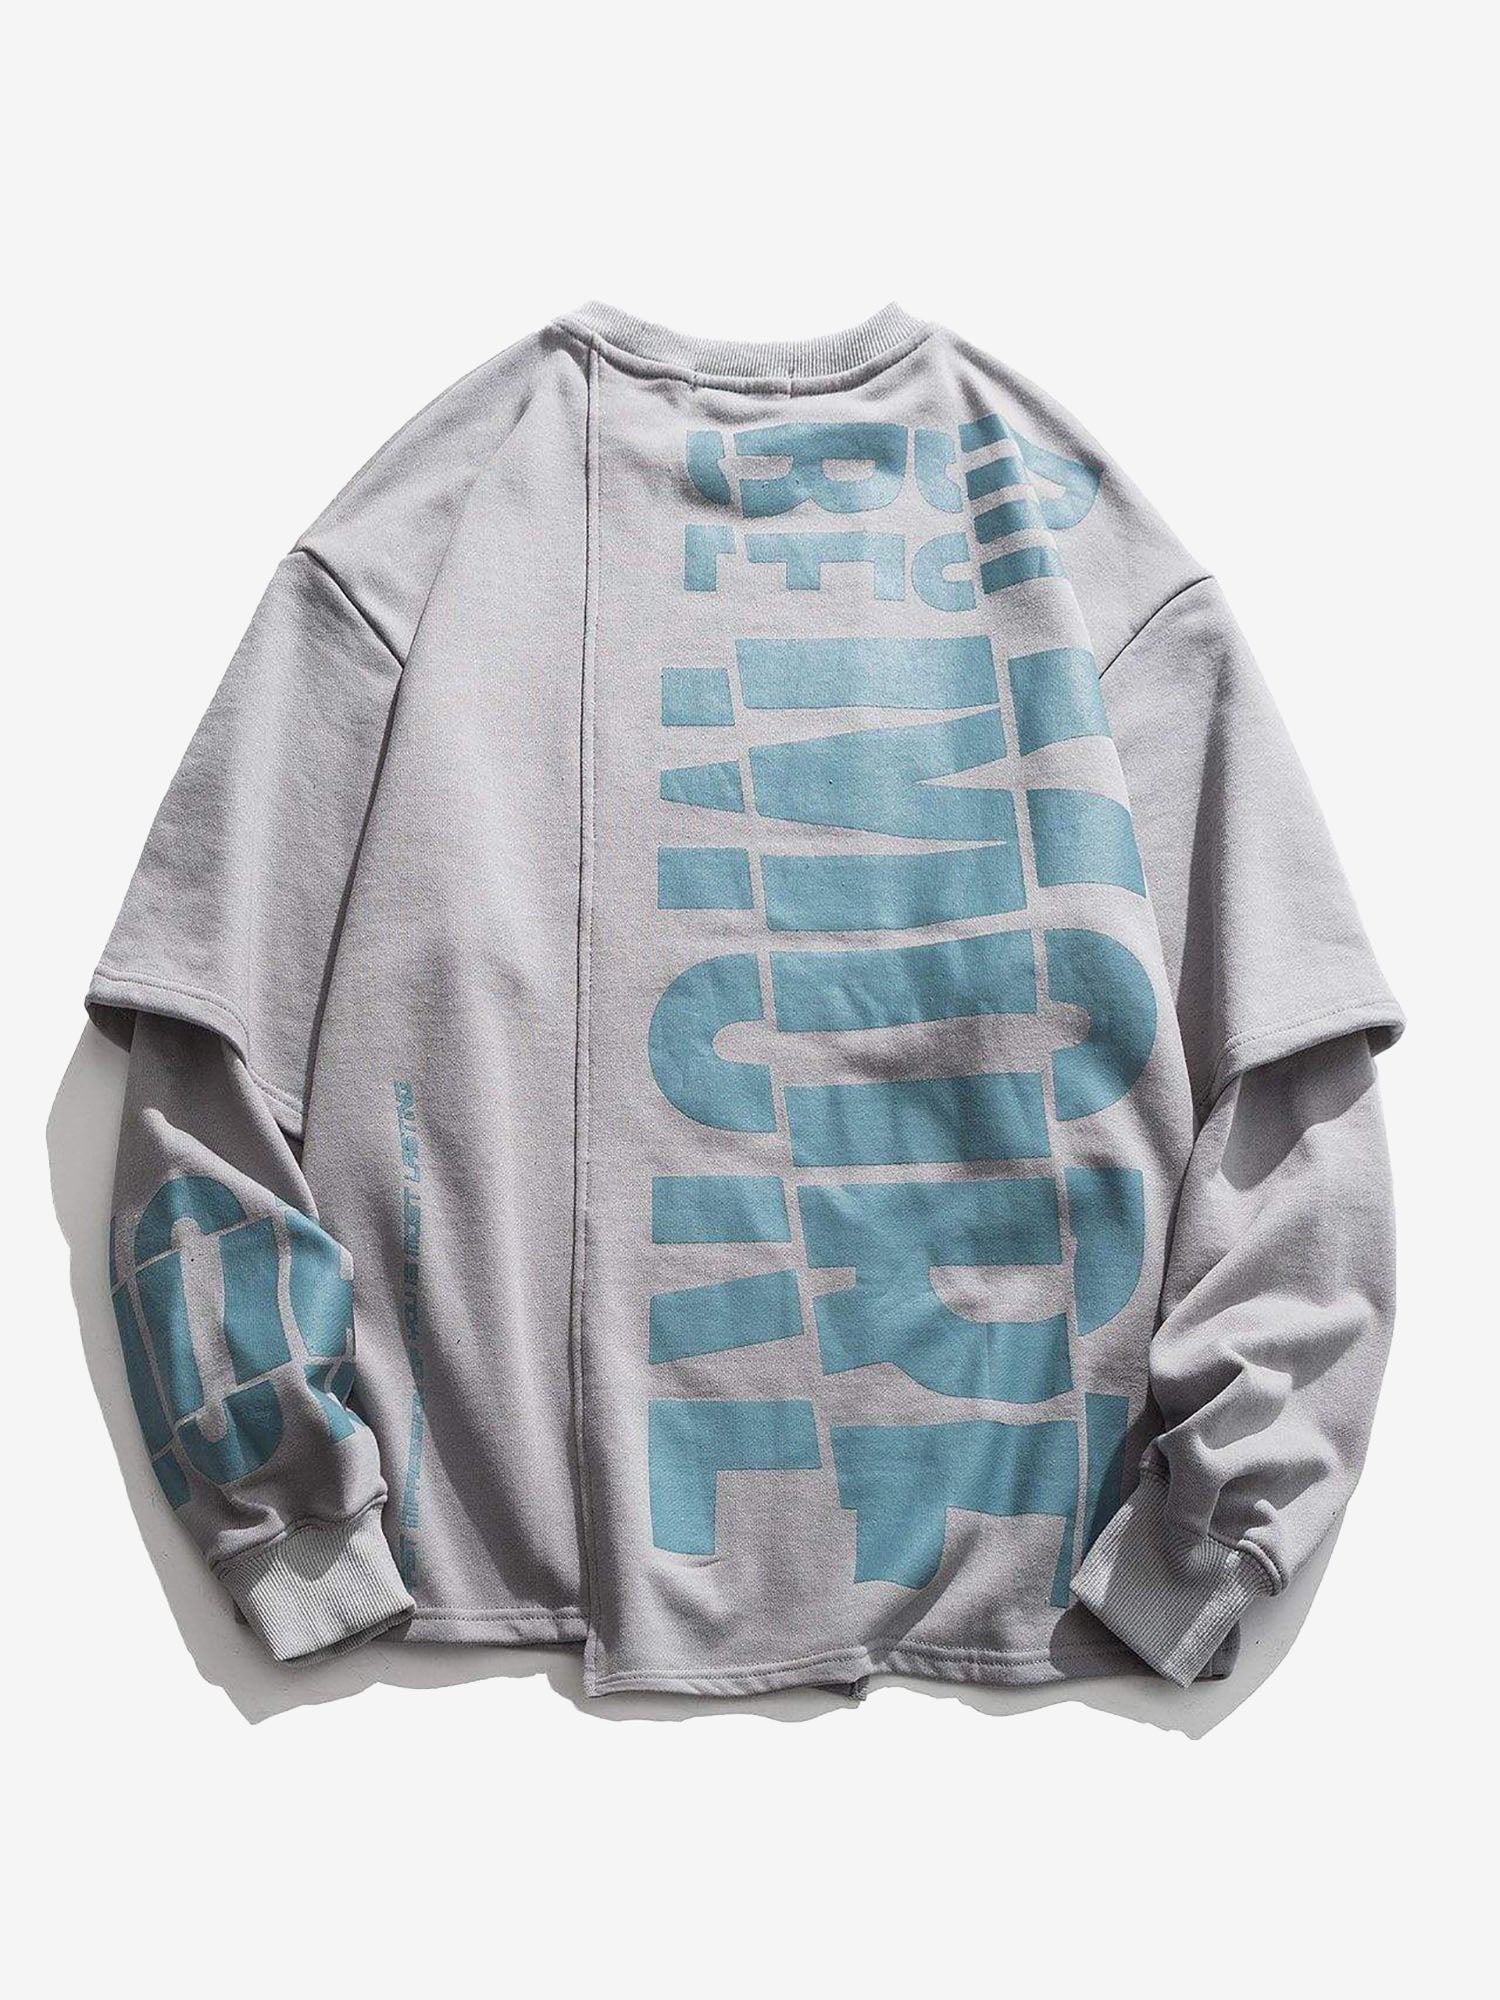 JUSTNOTAG Irregular Stitching Sweatshirt